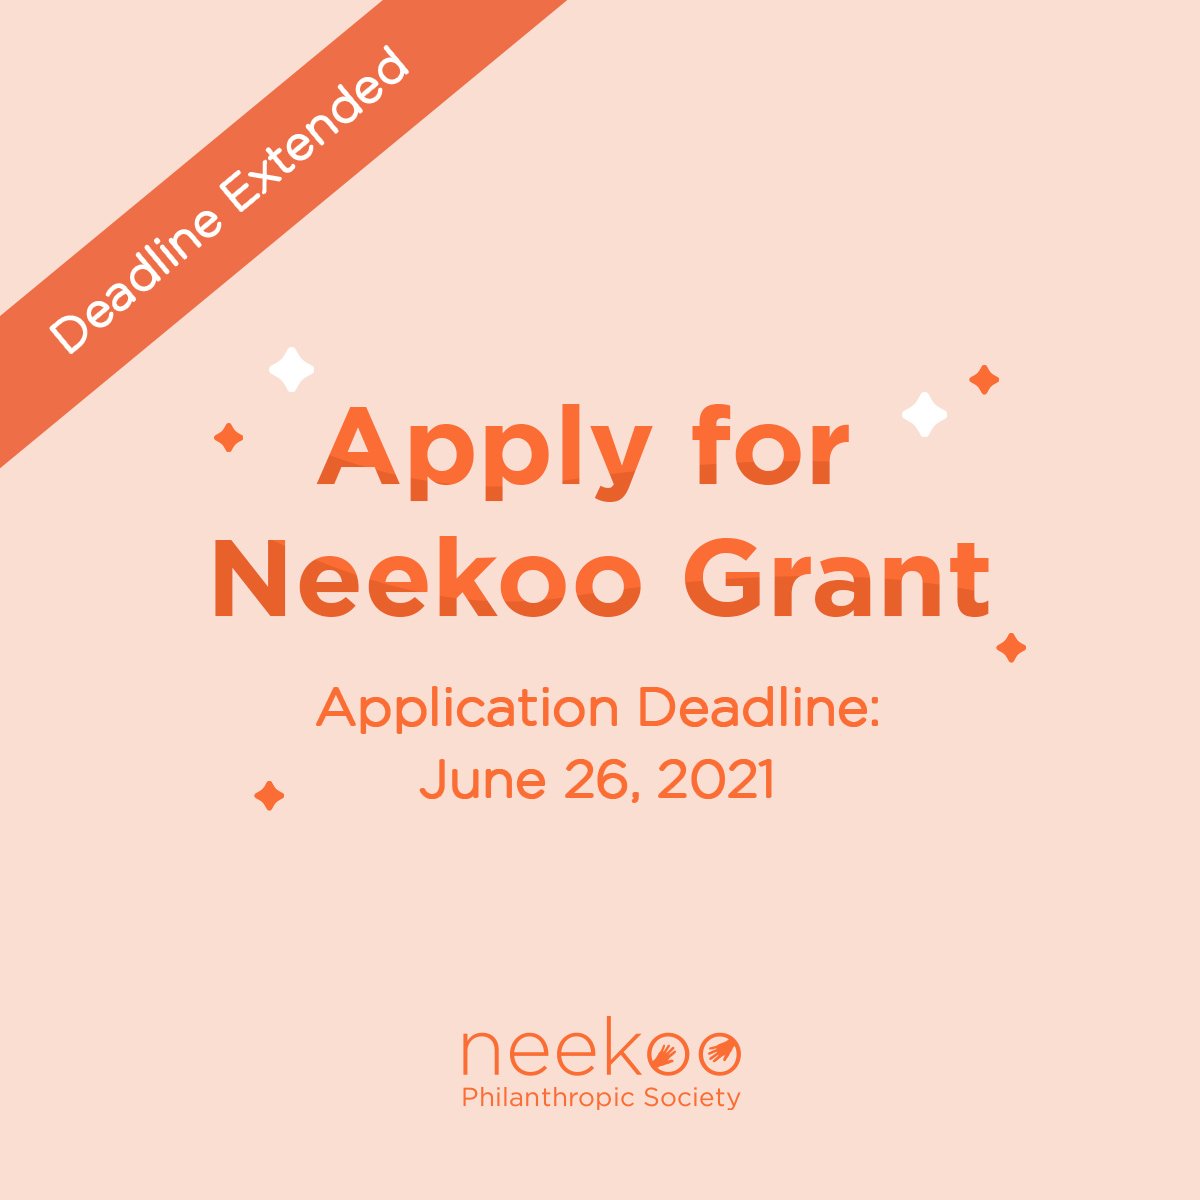 Neekoo Grant Application